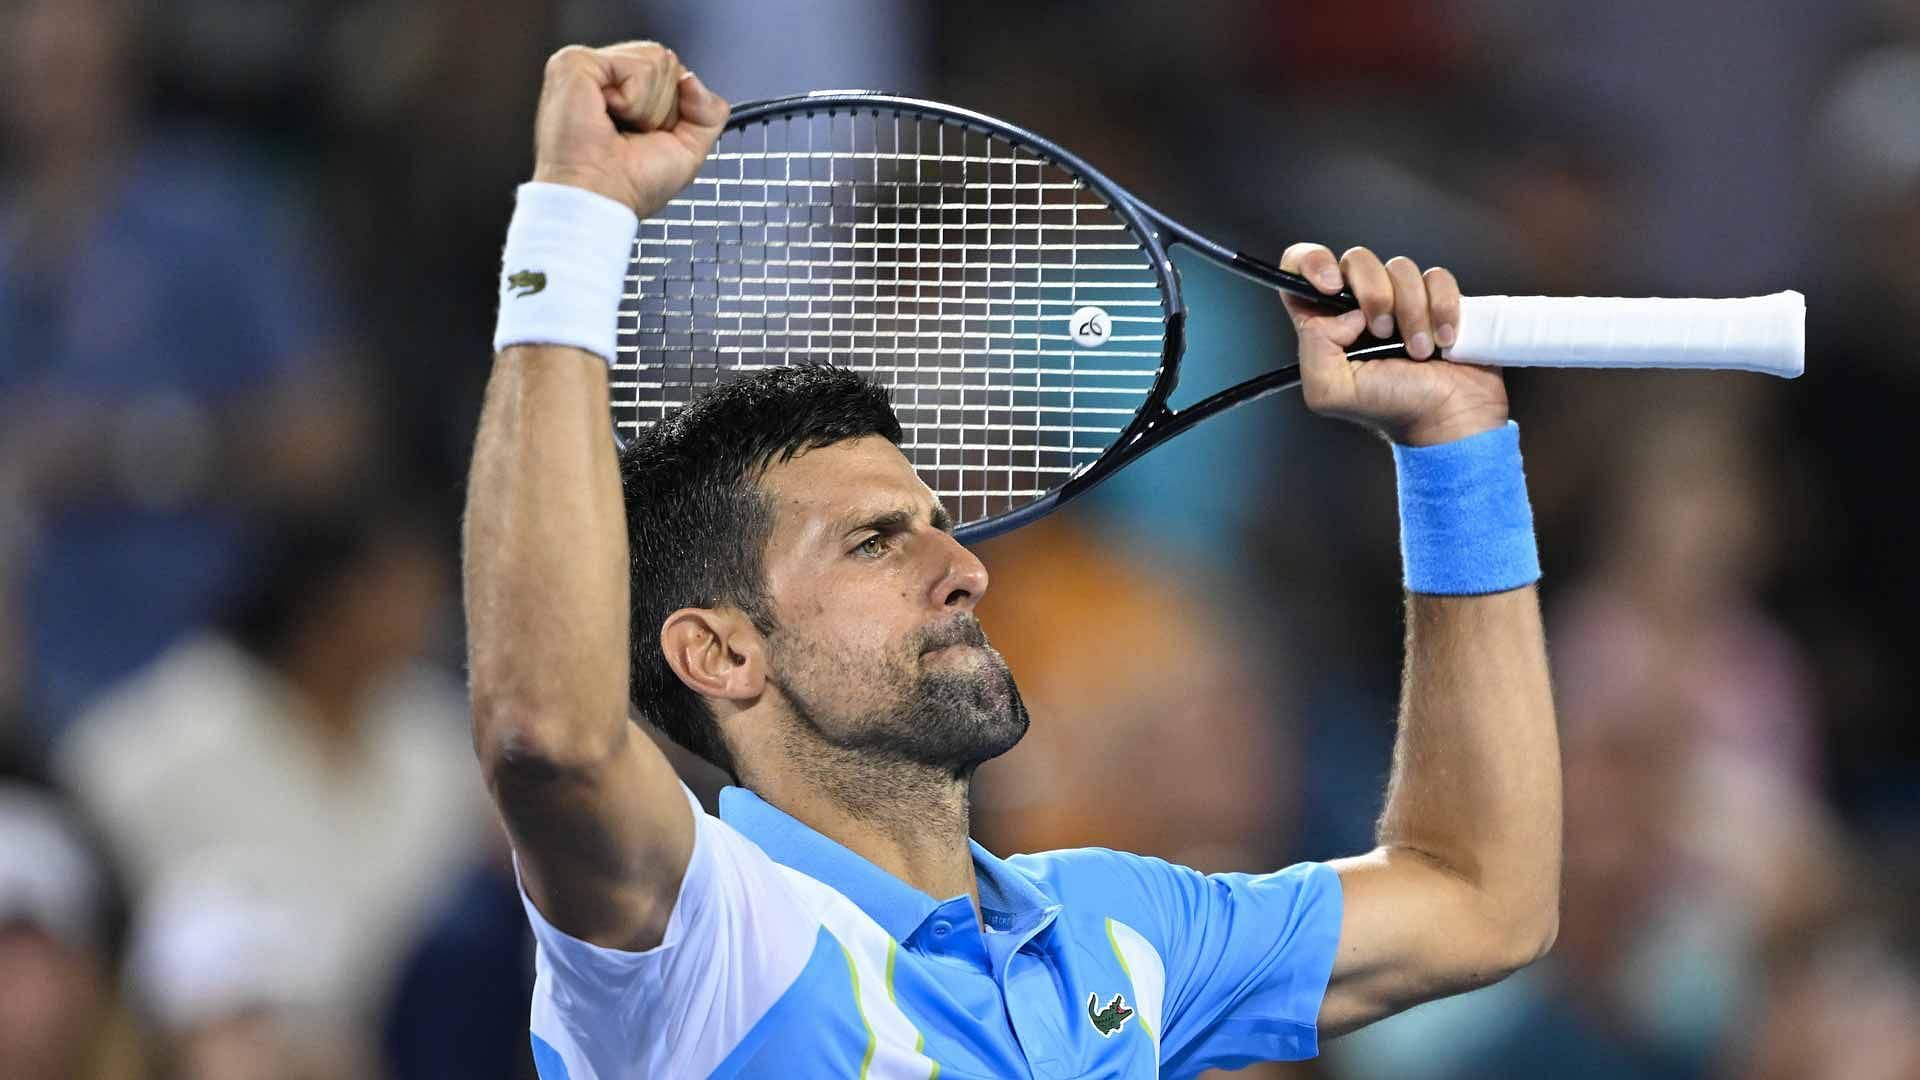 Novak Djokovic won a career-third title in Cincinnati on Sunday